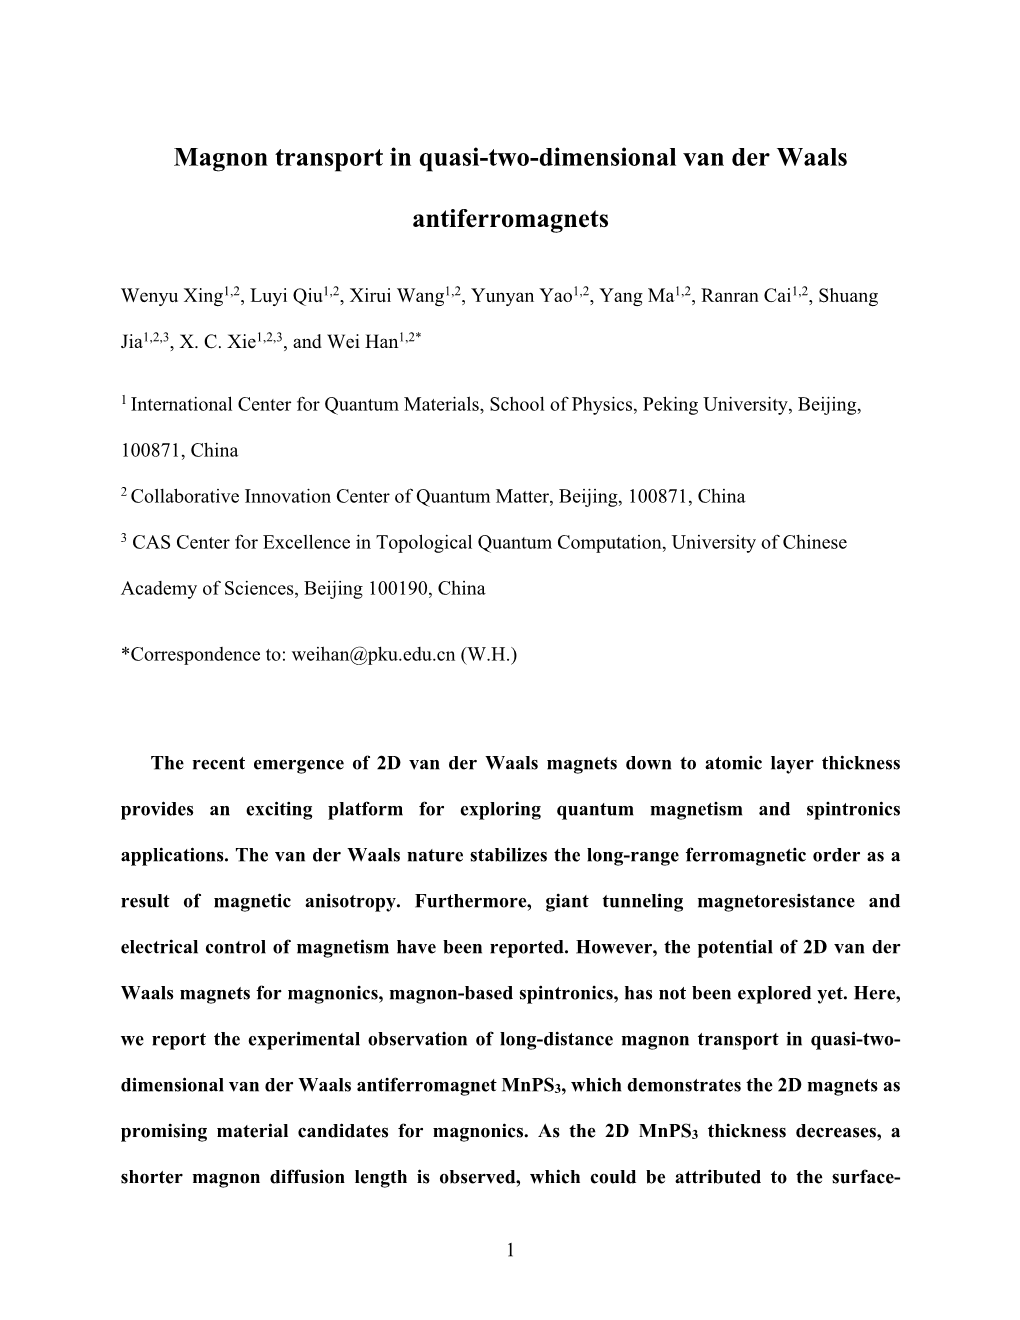 Magnon Transport in Quasi-Two-Dimensional Van Der Waals